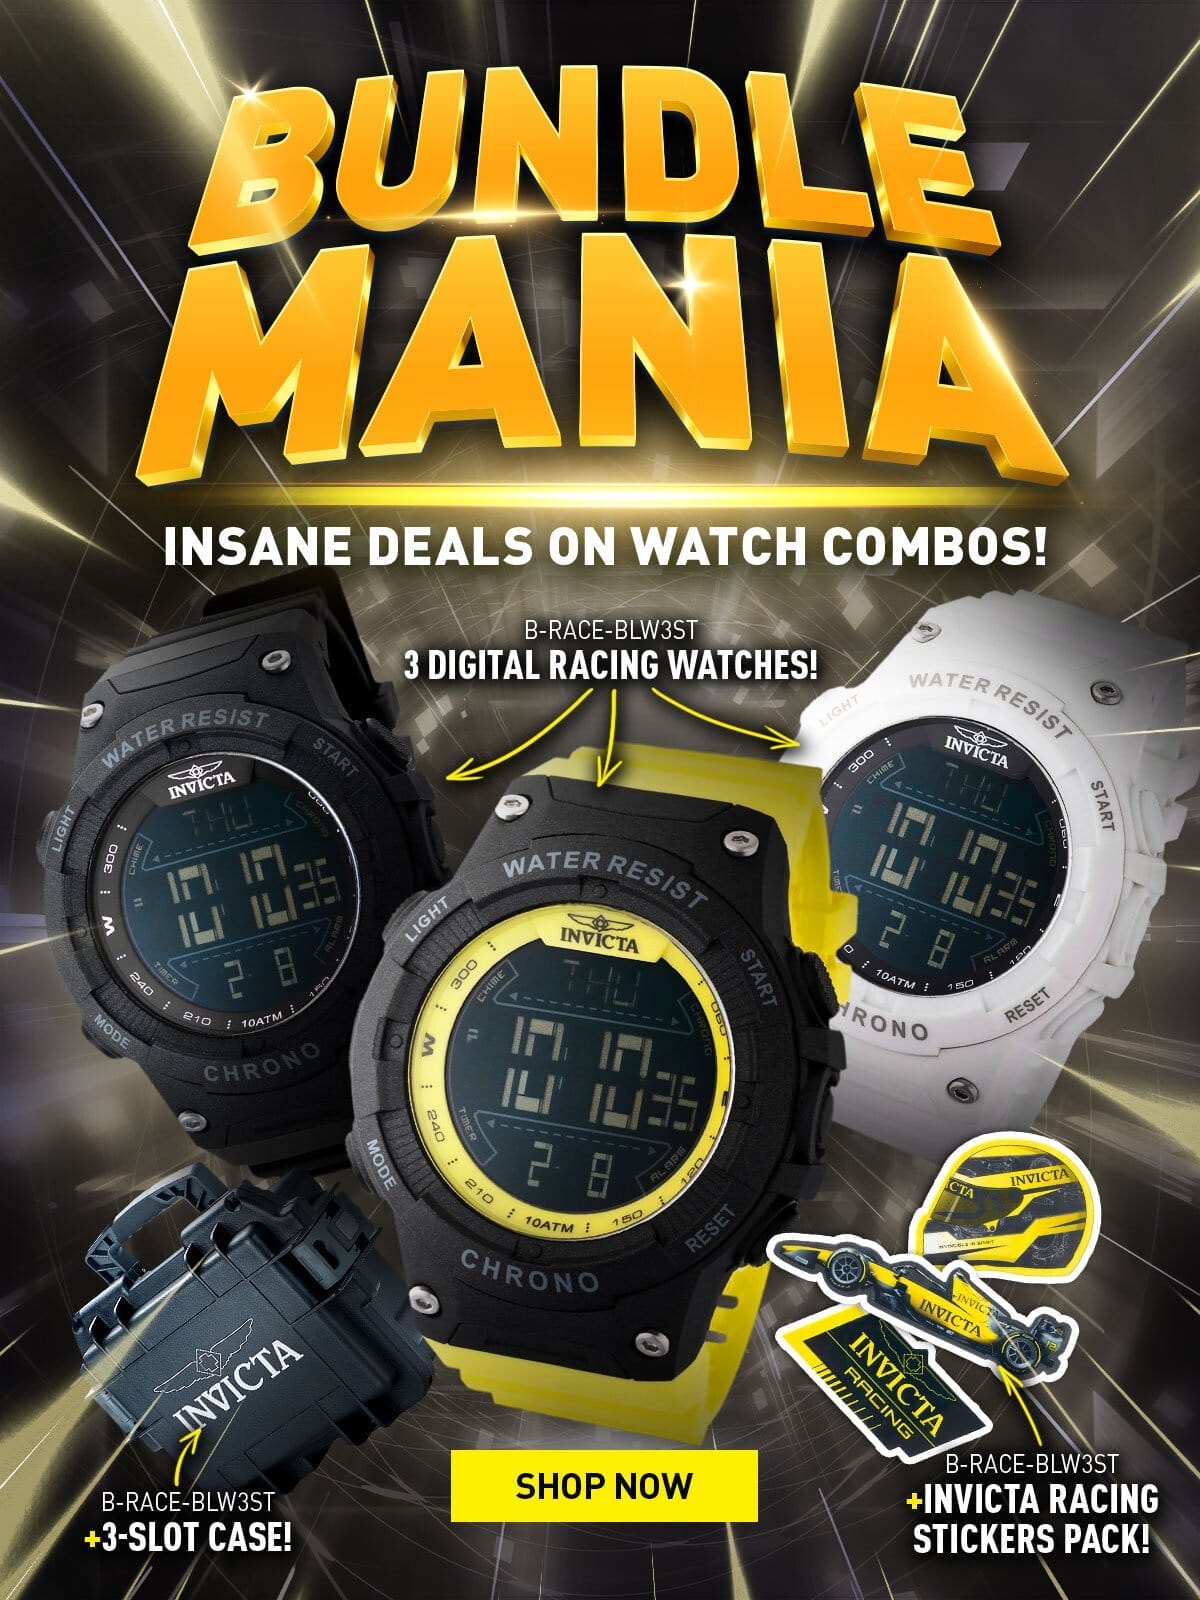 Bundlemania - Insane deals on watch combos